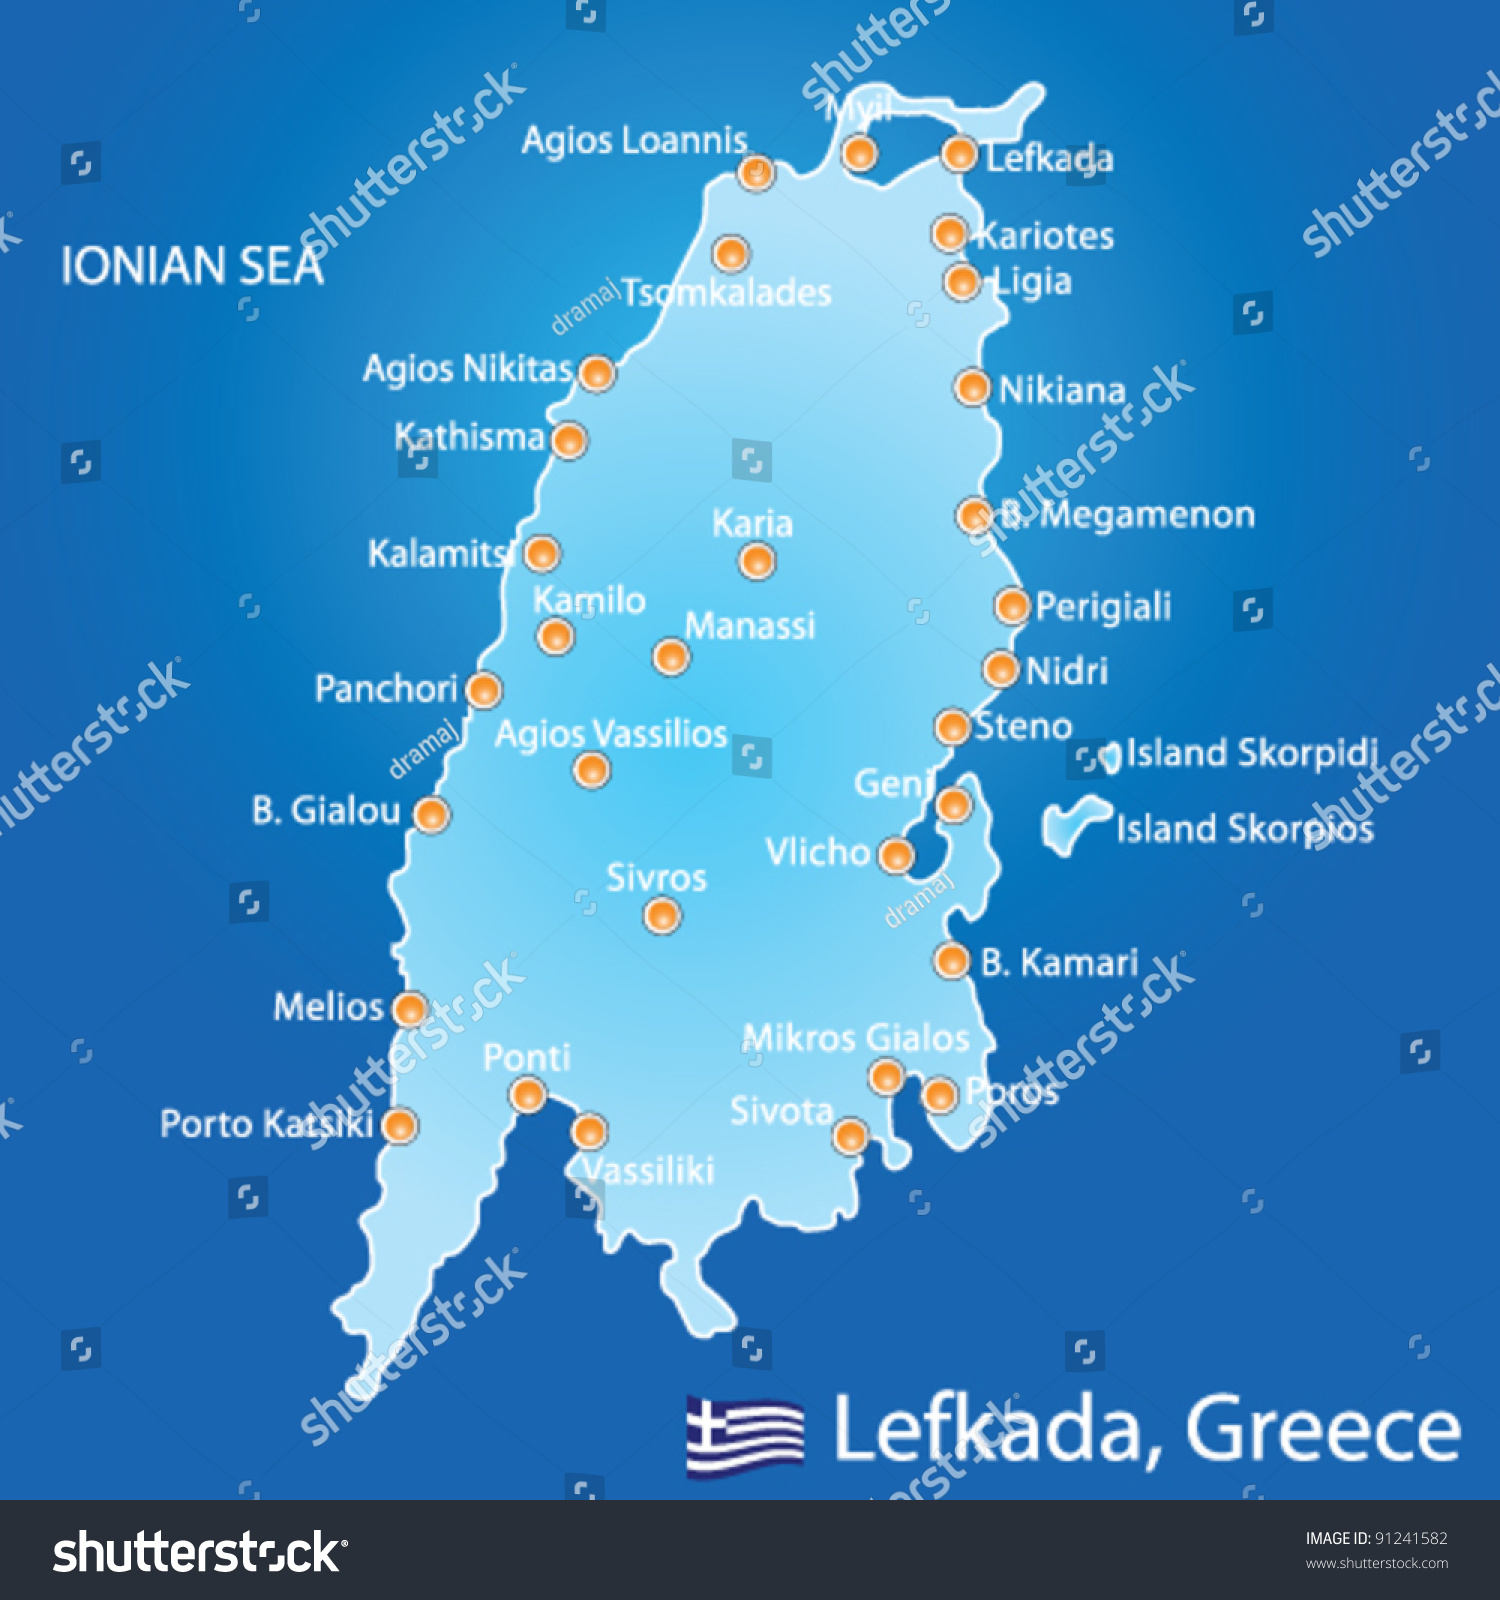 Island Lefkada Greece Map On Blue Stock Vector 91241582 - Shutterstock